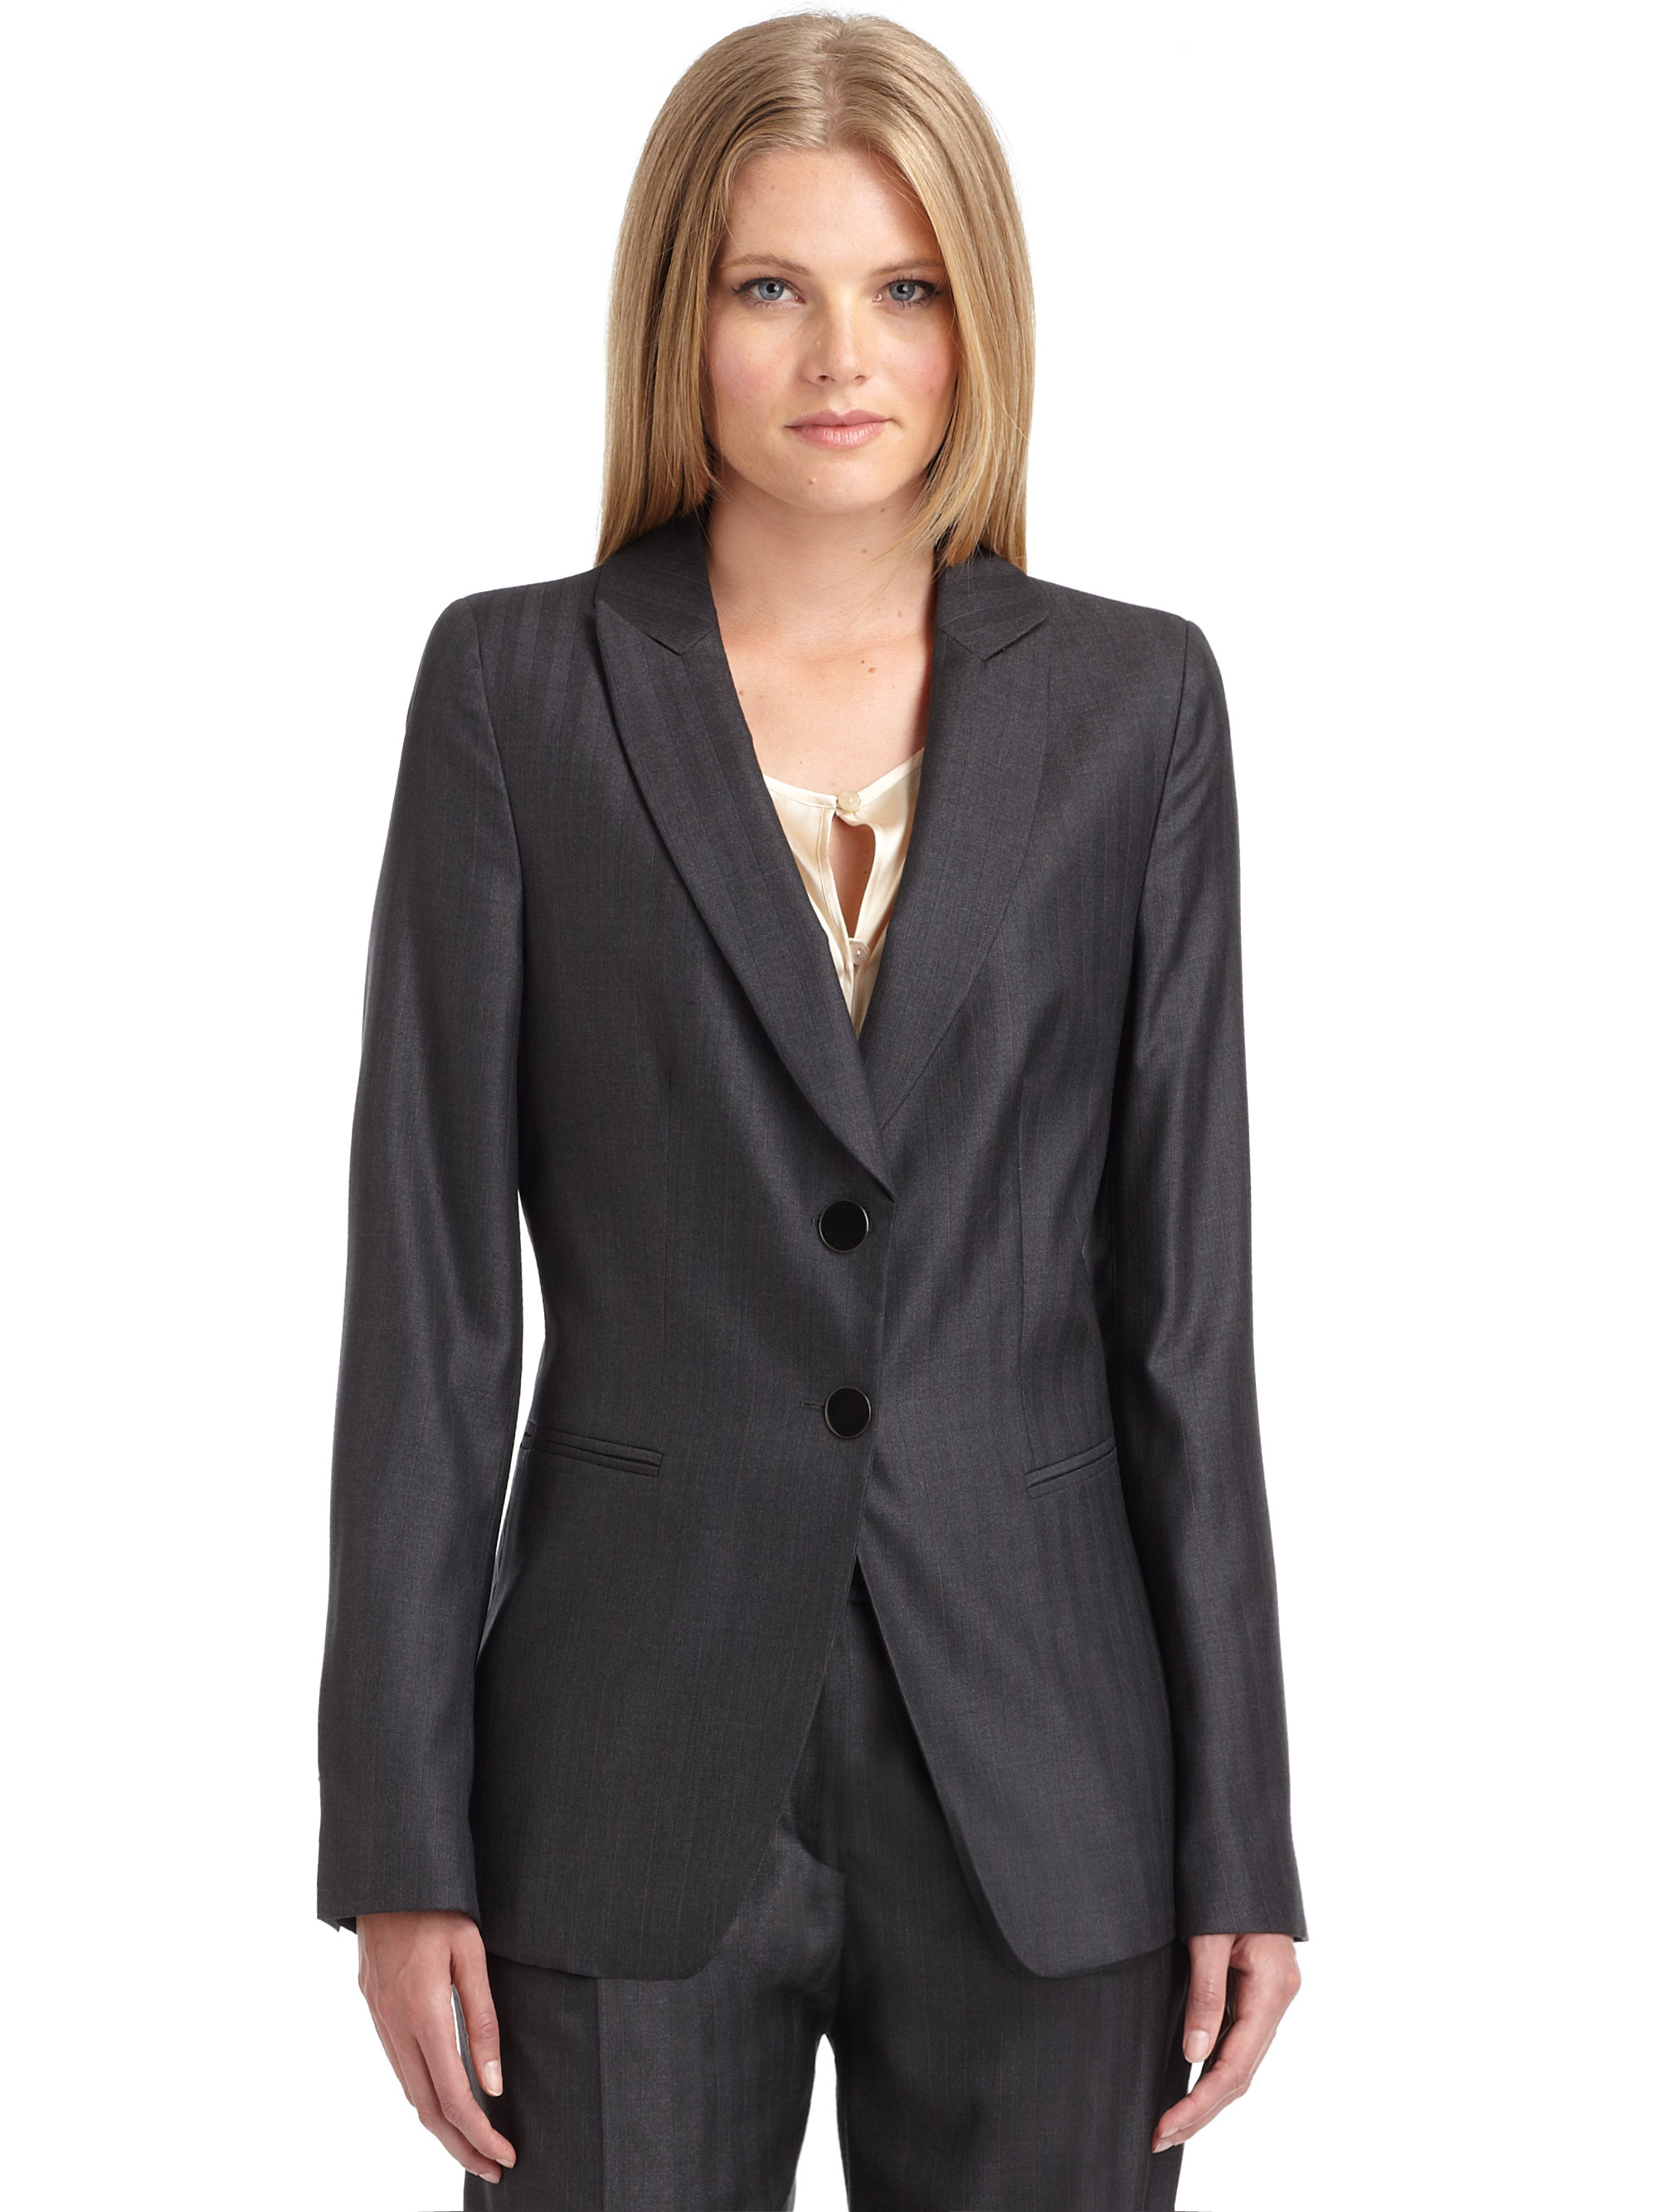 Lyst - Giorgio Armani Woolsilk Pinstripe Suit Jacket in Gray